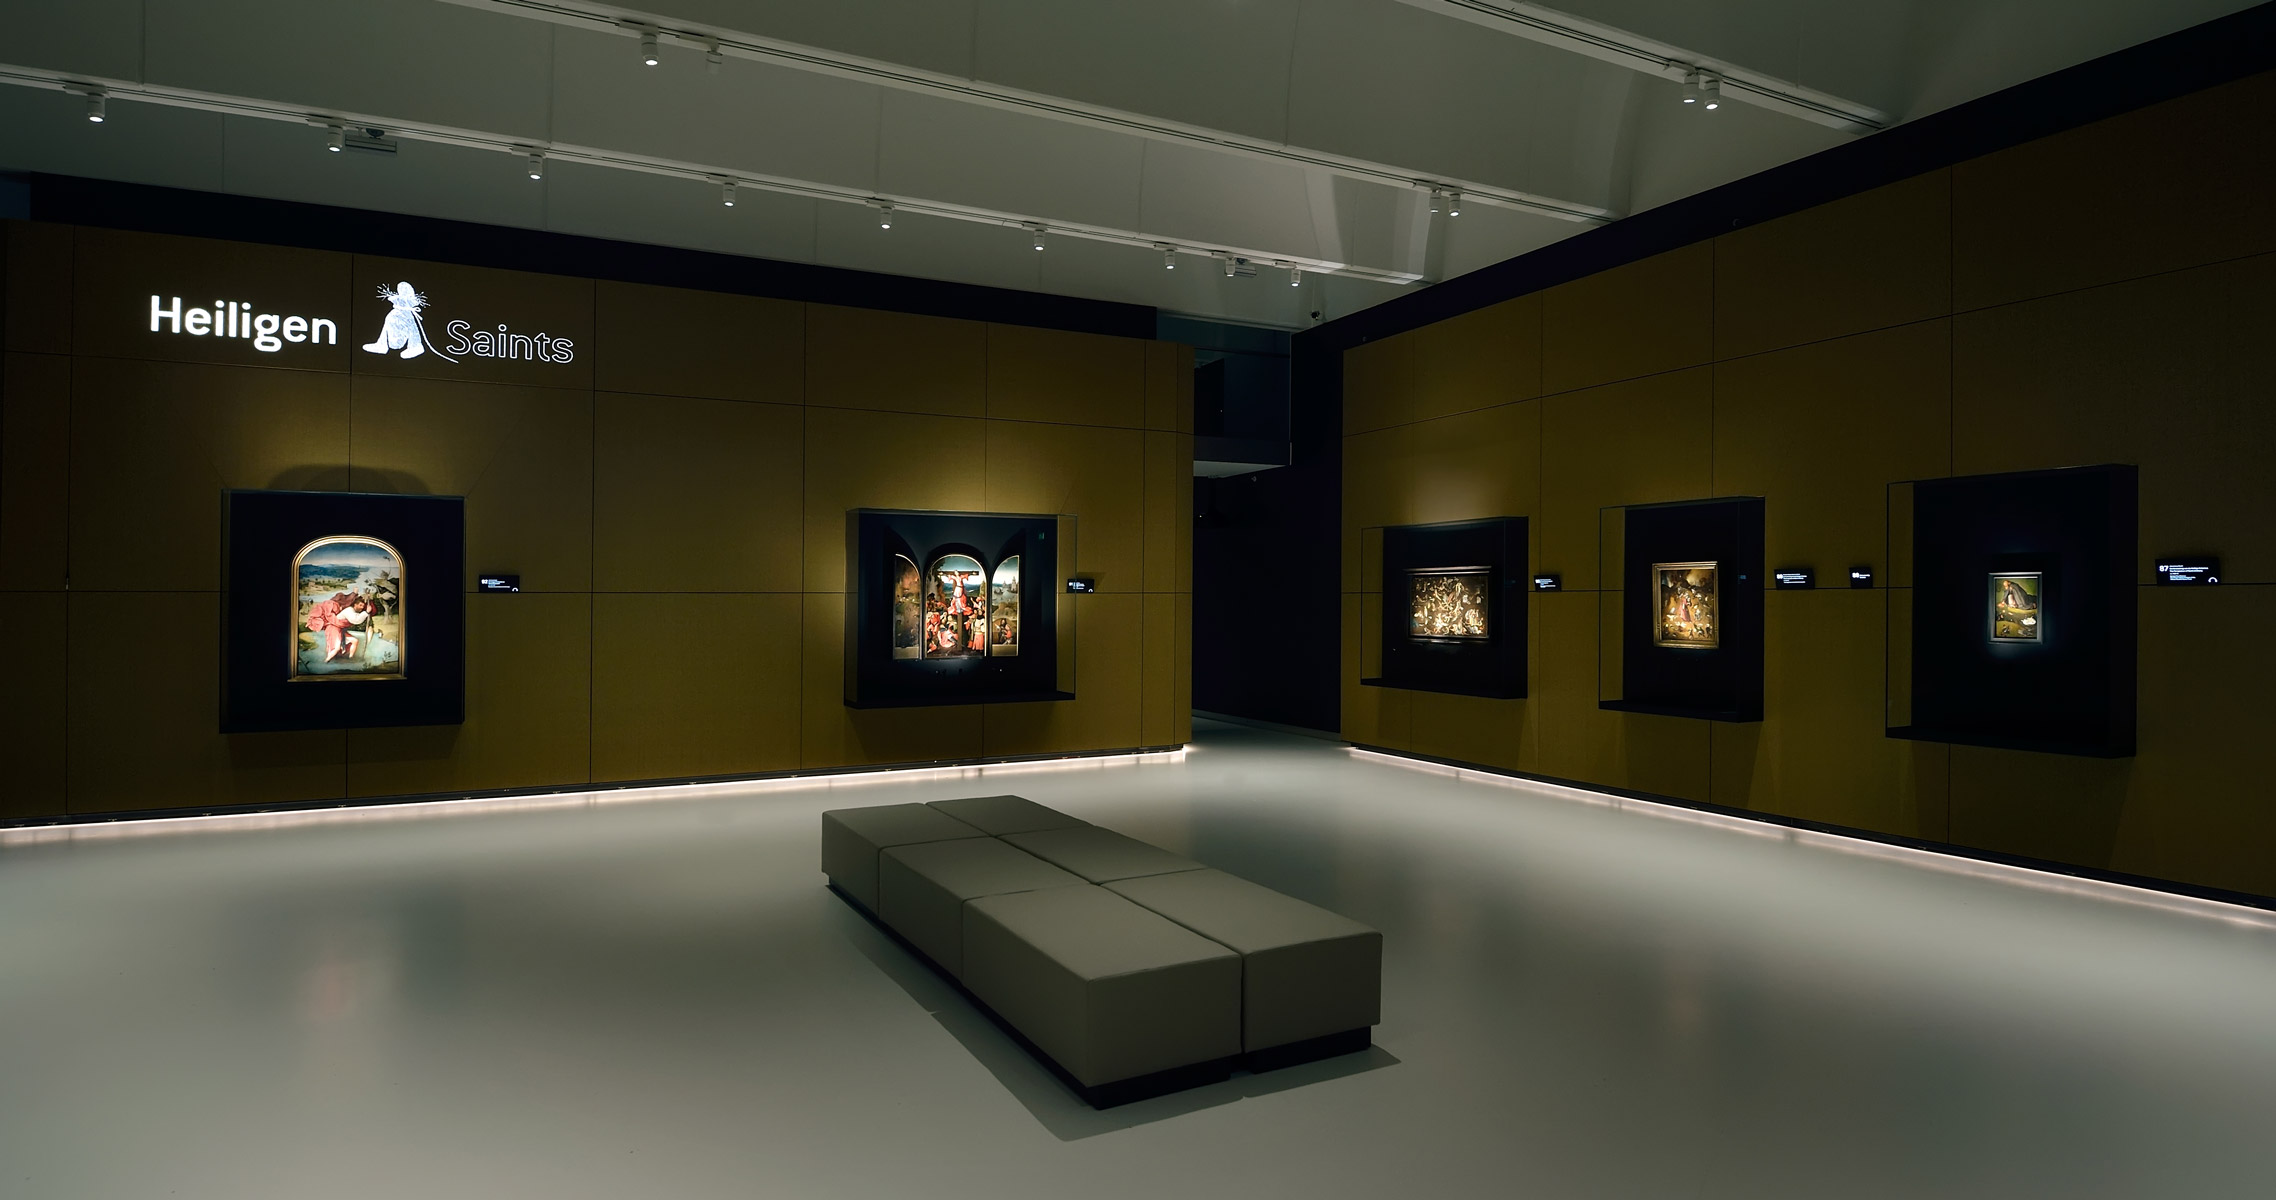 Tentoonstelling Jheronimus Bosch - Noordbrabants Museum